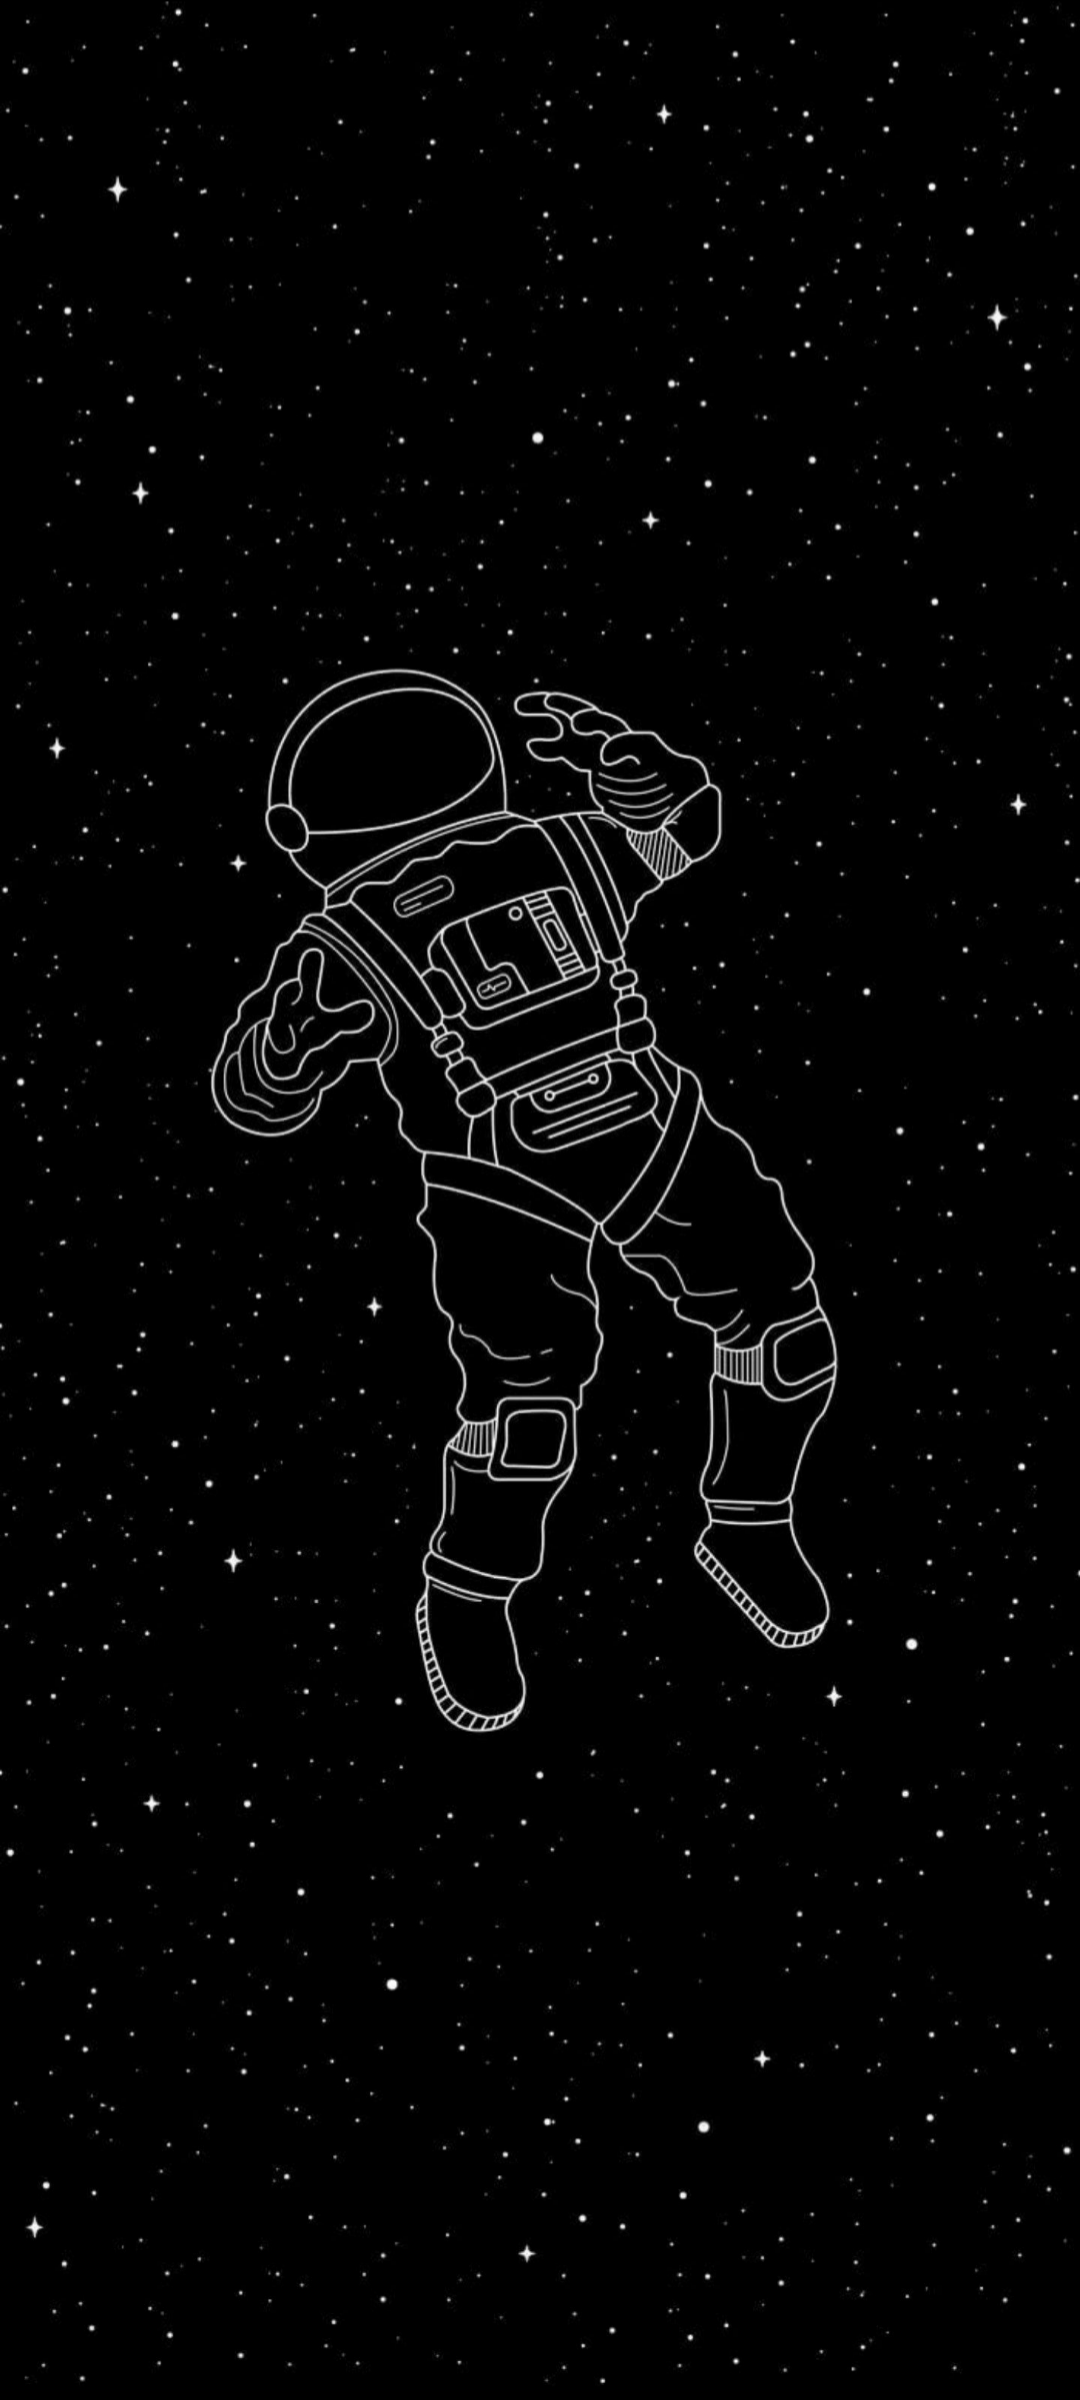 Wallpaper ID 336345  Sci Fi Astronaut Phone Wallpaper Swing Space  1284x2778 free download